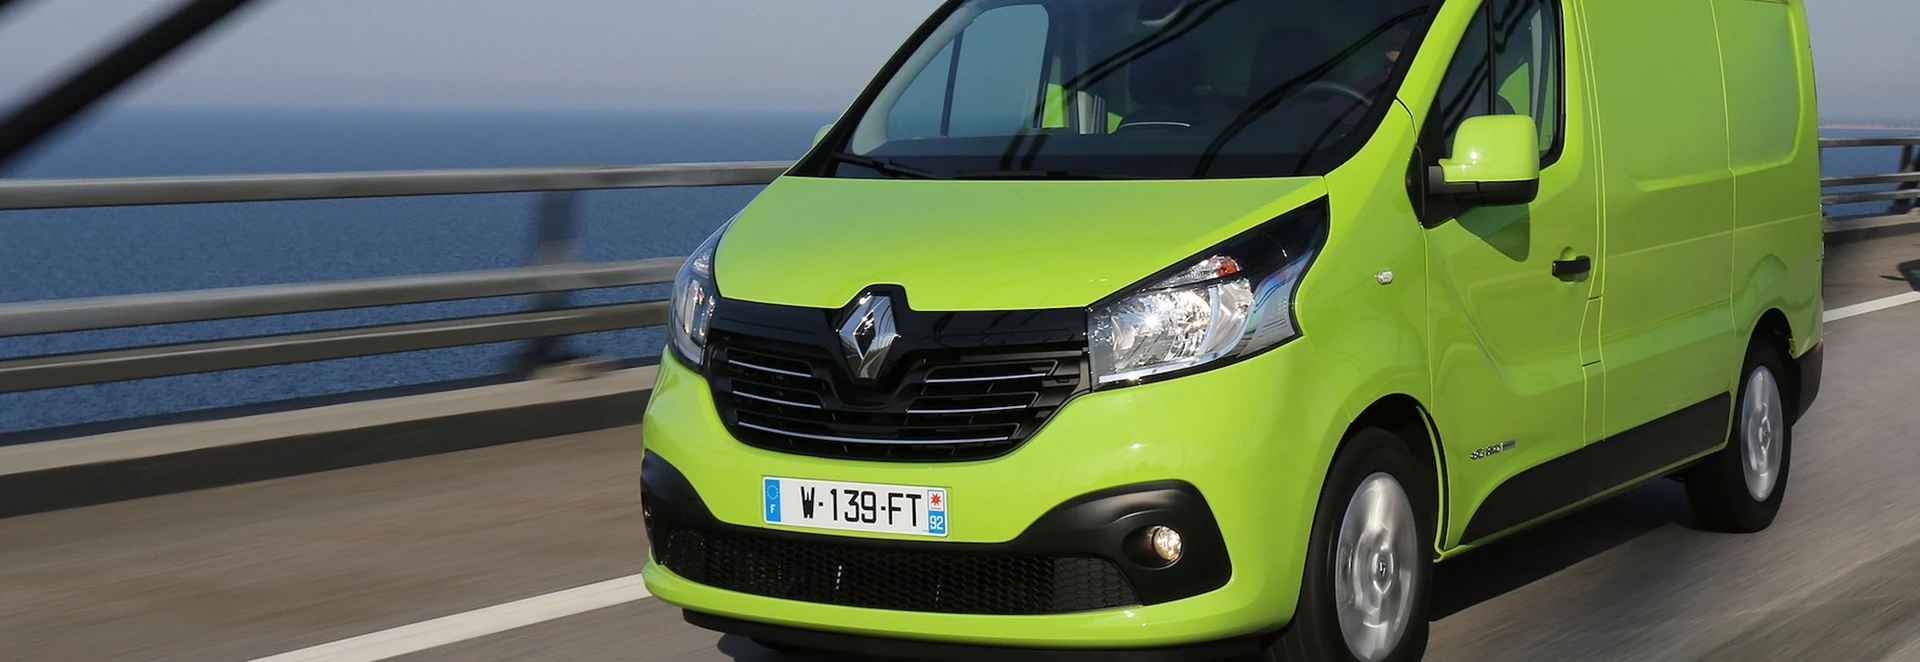 Renault Trafic panel van review